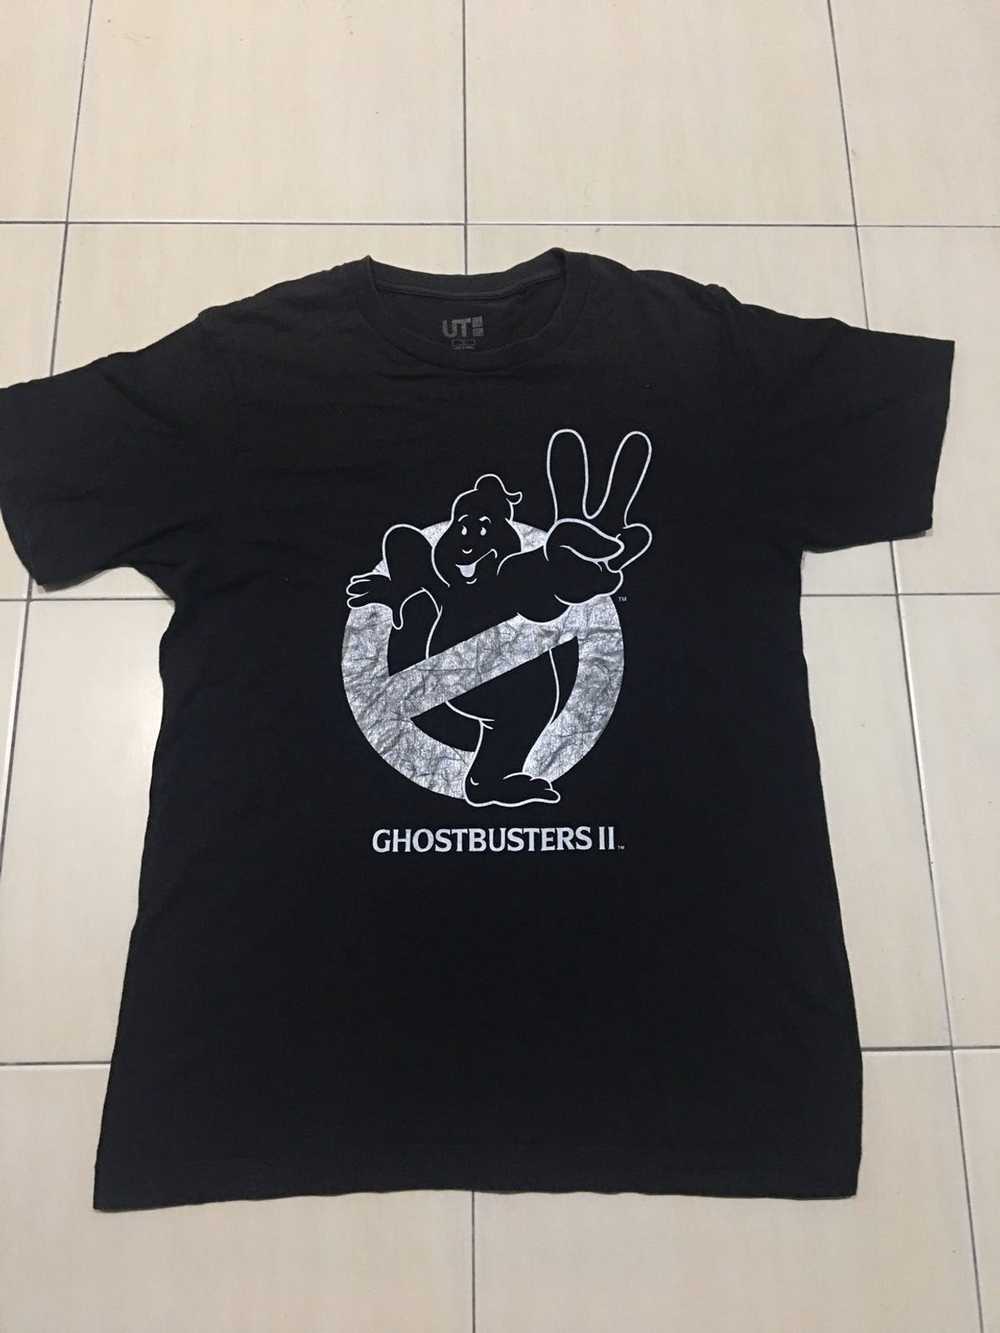 Uniqlo Ghostbusters 2 movie film promo shirt - image 3